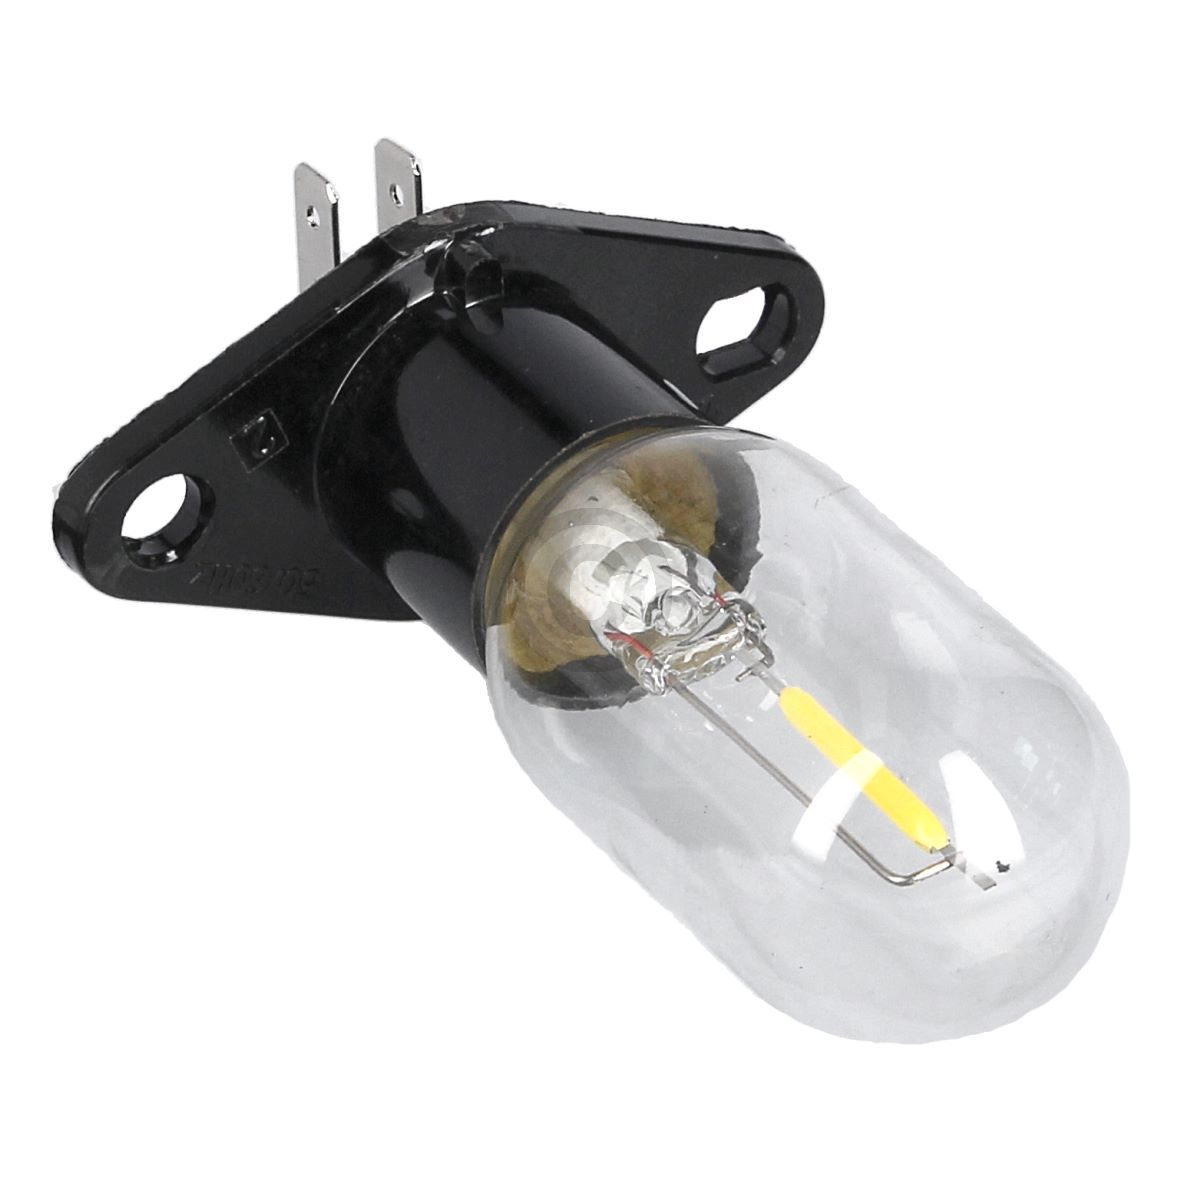 Lampe LED 1W T25 mit Sockel smeg 824610572 1W für Mikrowelle